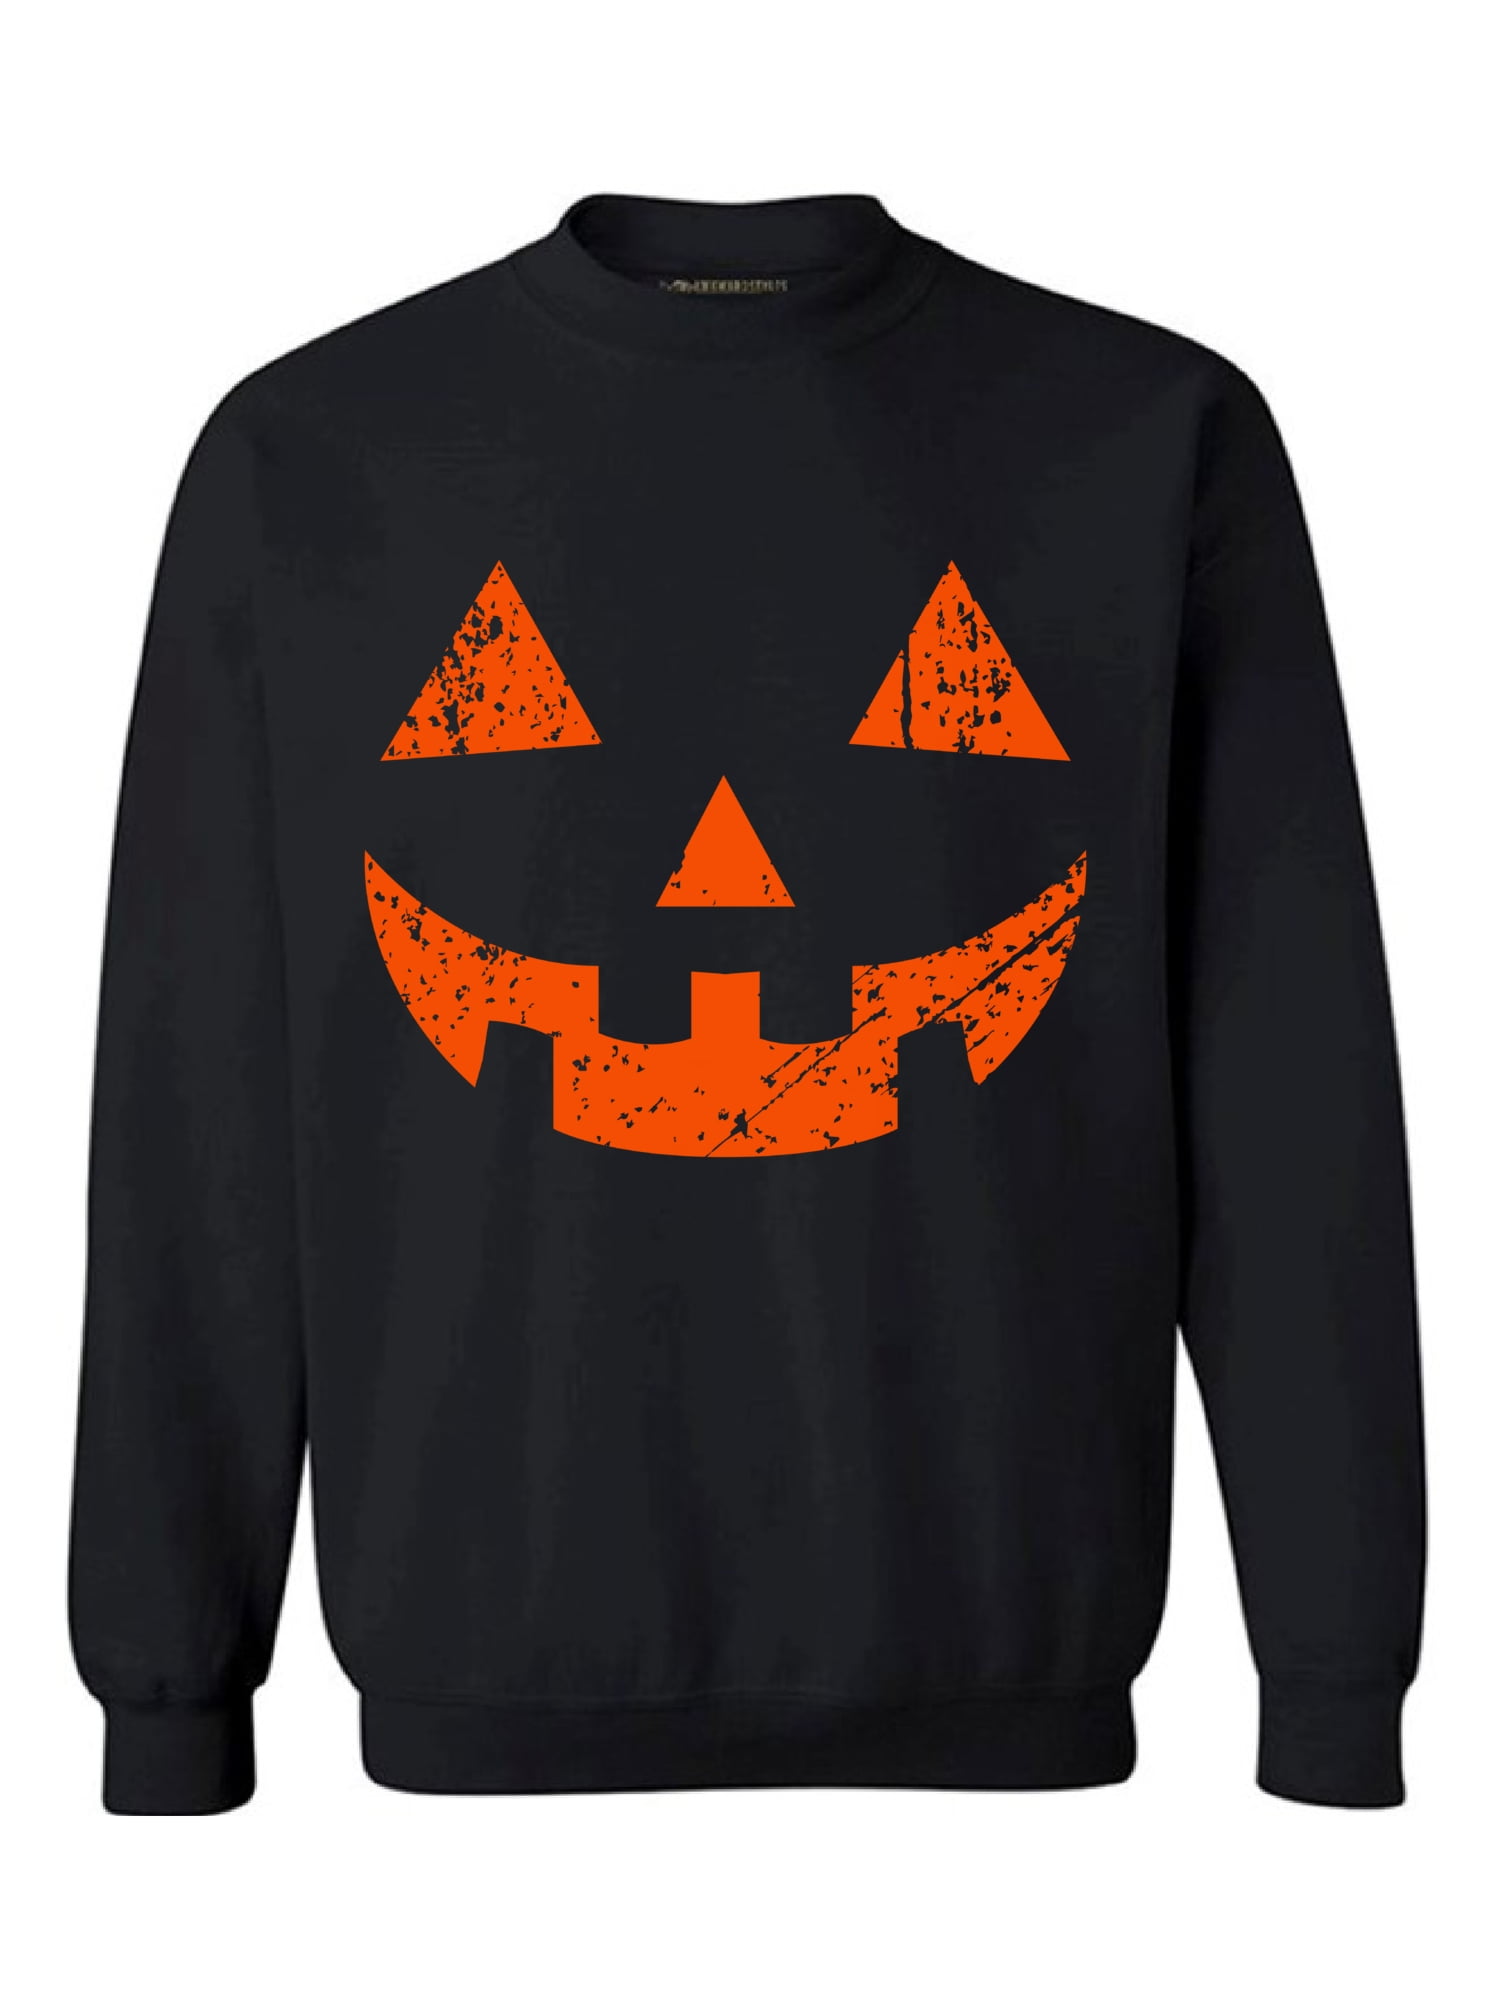 Pumpkin Sweater Pumpkin Face Sweatshirt Helloween Hoodie Halloween Sweater JackOLantern Horror Jack O' Lantern Sweatern Sweatshirt